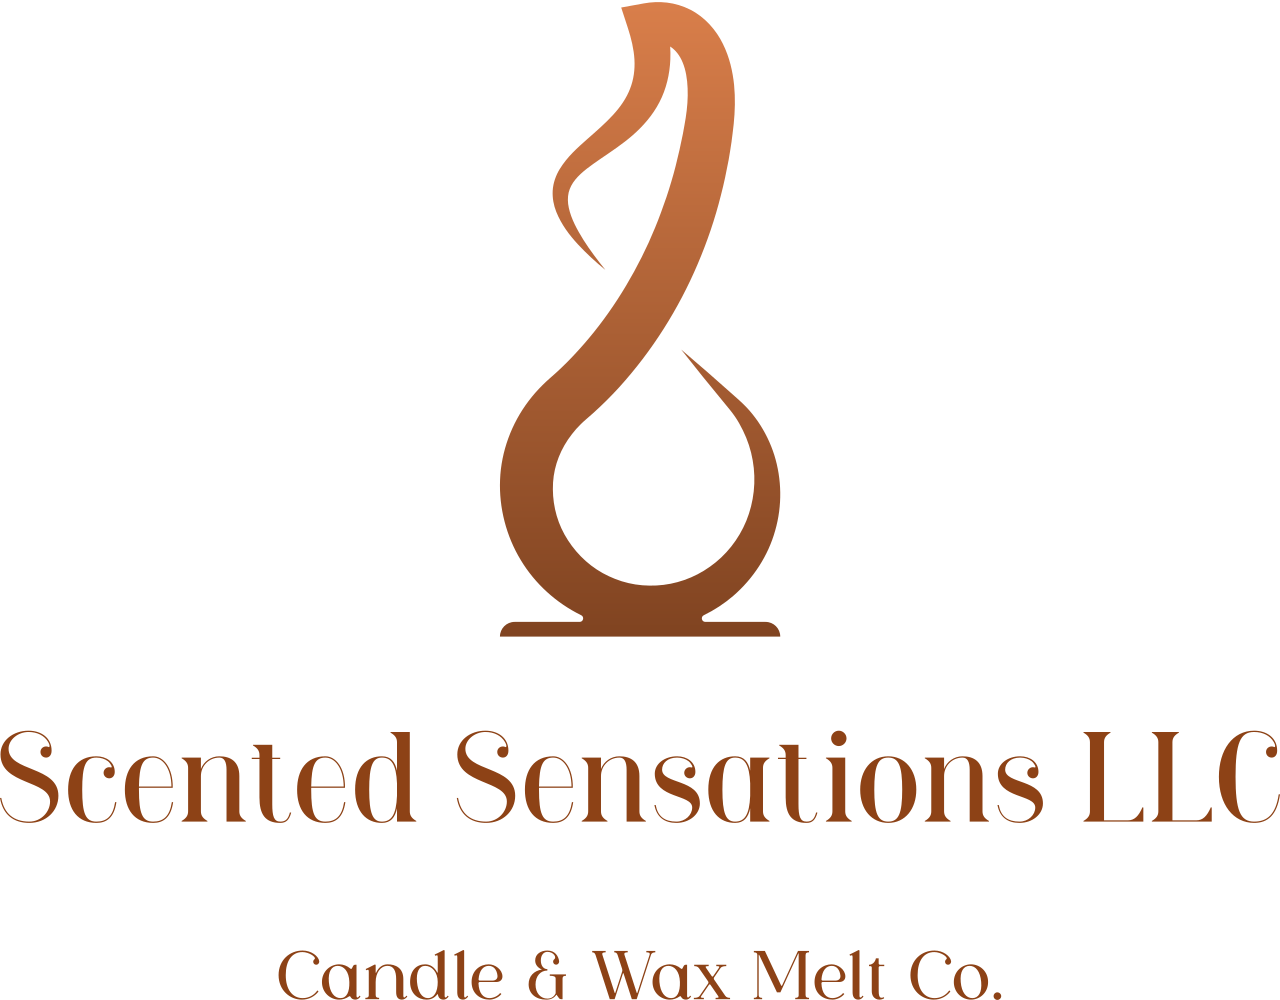 Scented Sensations LLC's logo